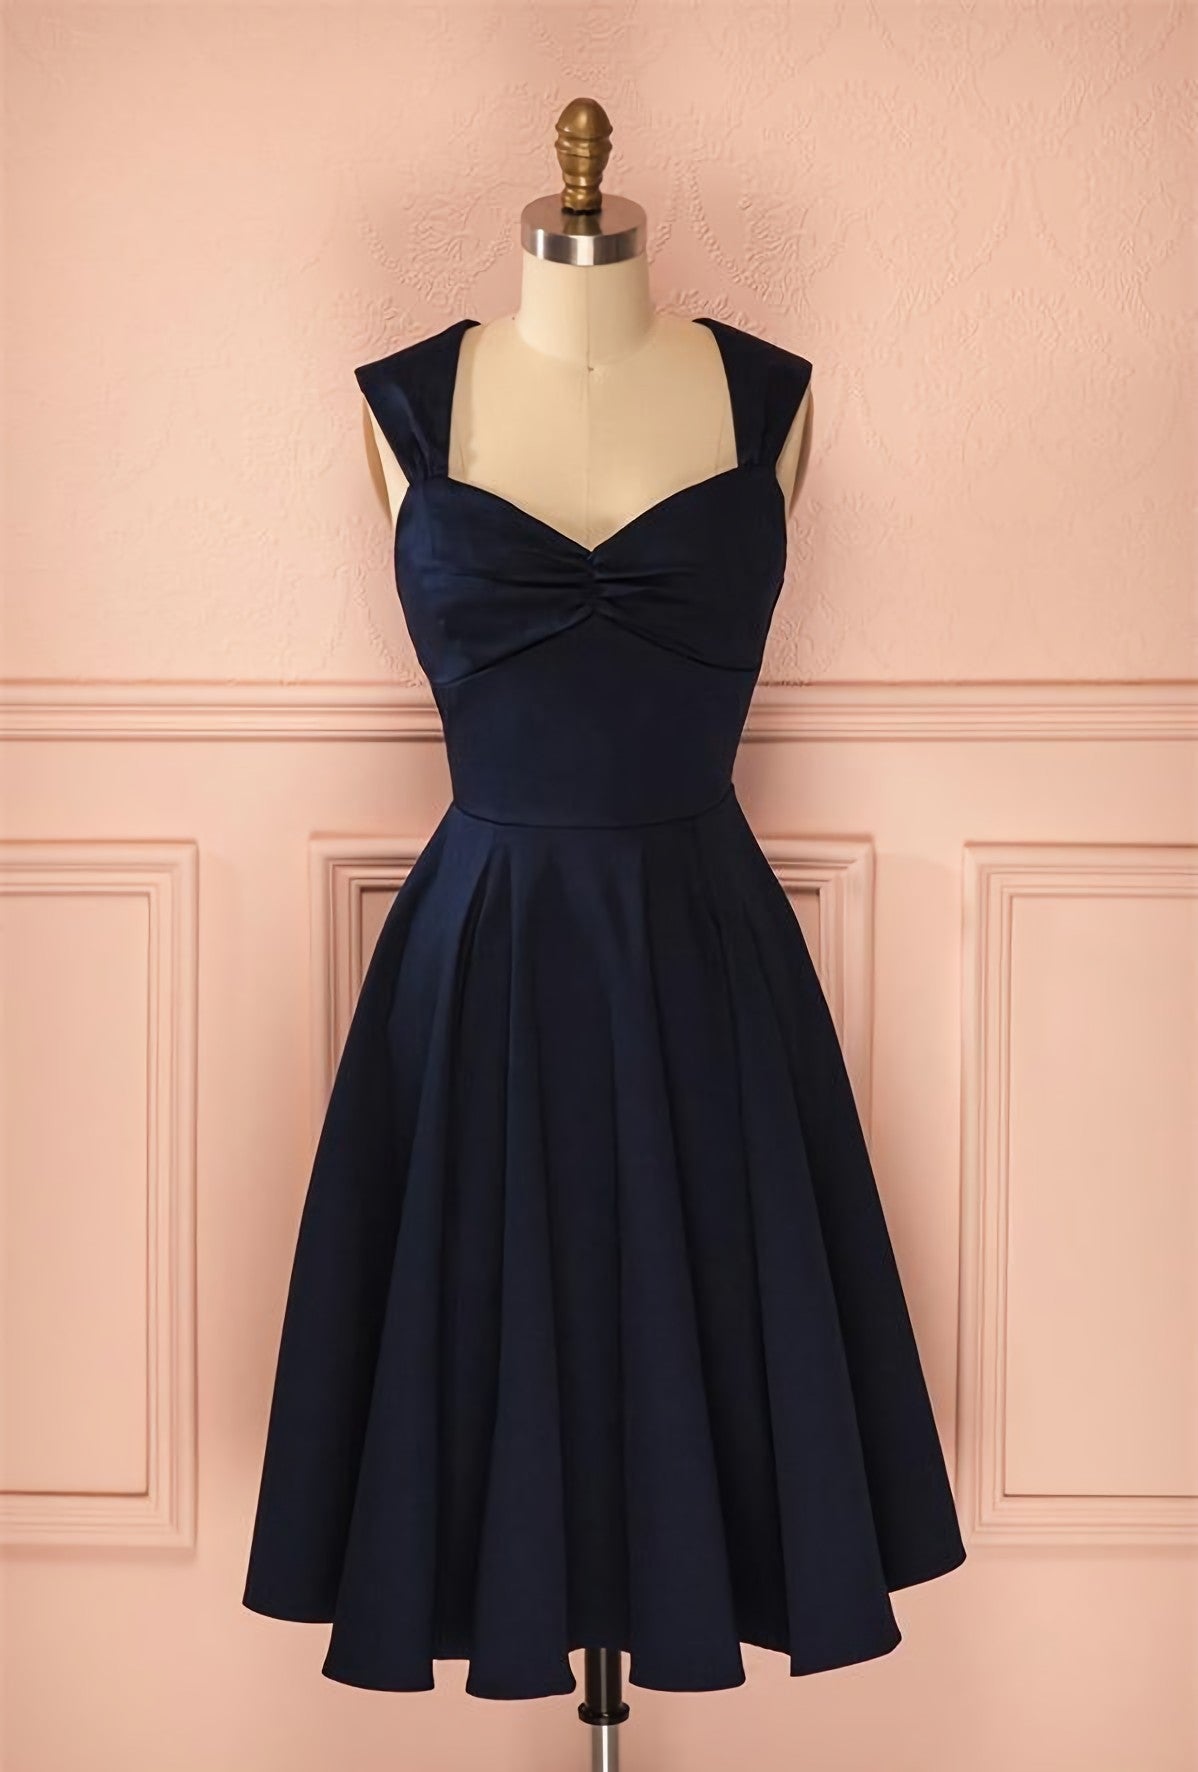 Prom Dress Style, Vintage Simple Short Navy Blue Elegant Handmade Homecoing Homecoming Dresses